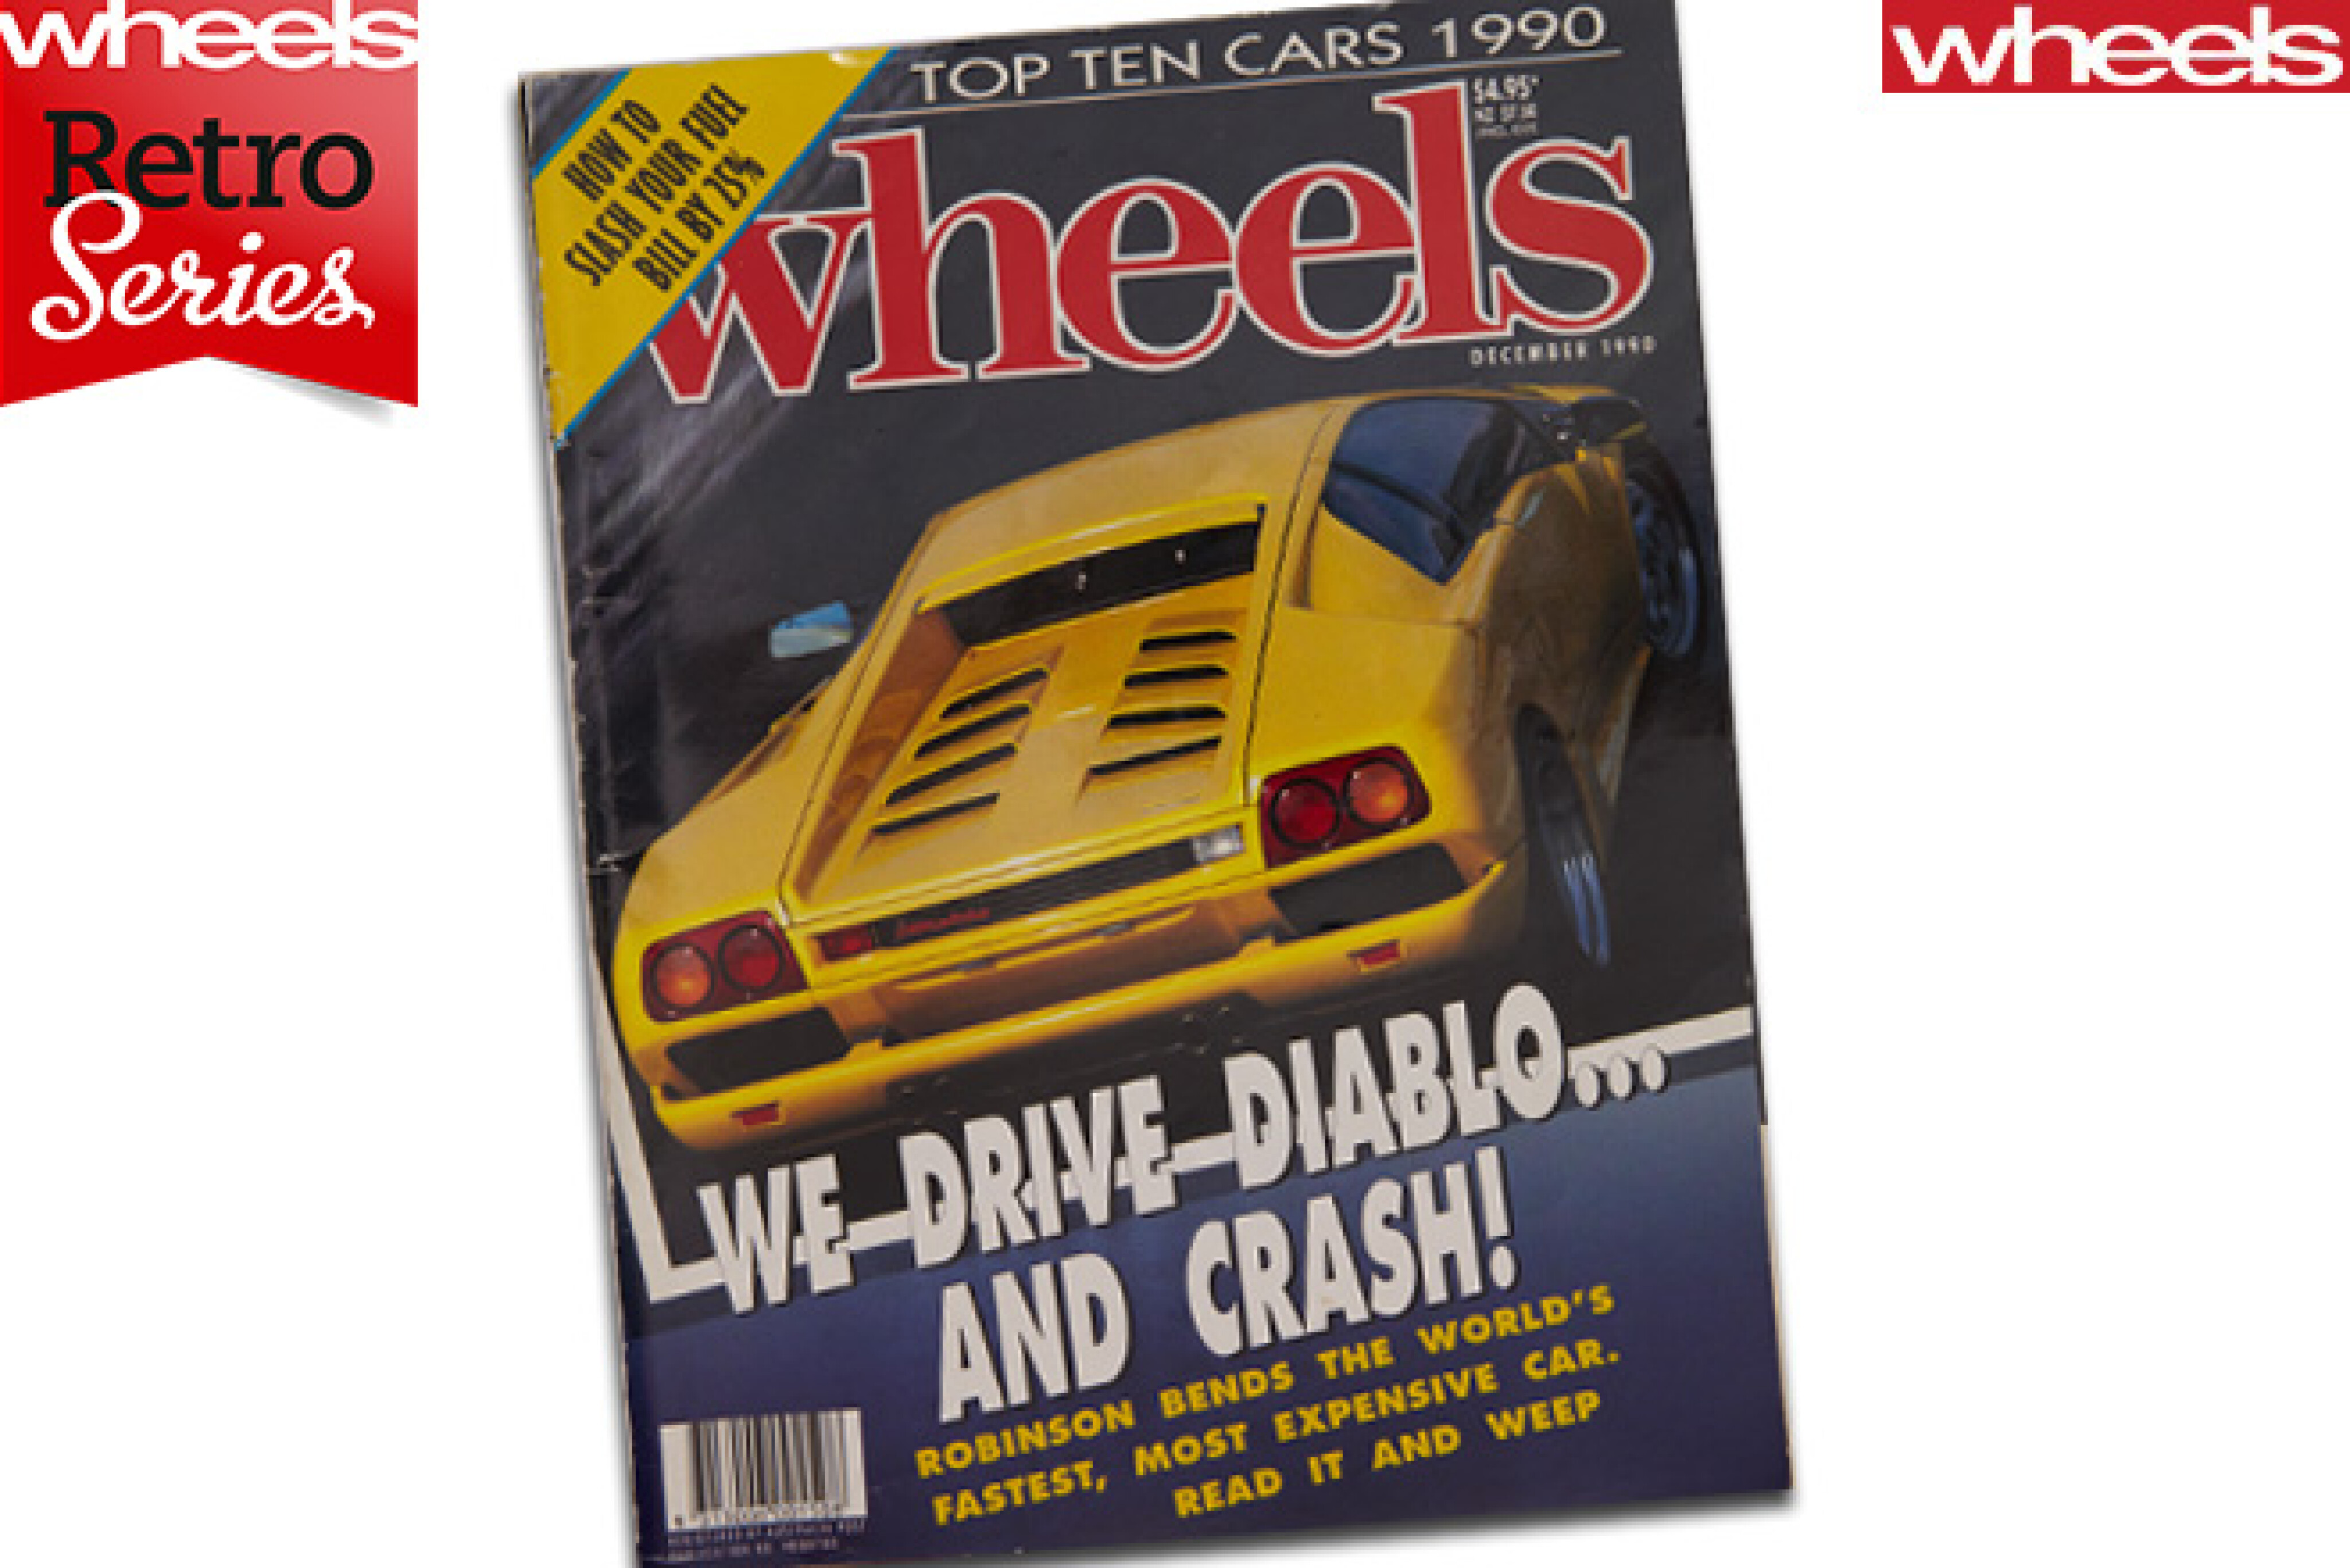 b65009bf568/lamborghini diablo wheels magazine jpg